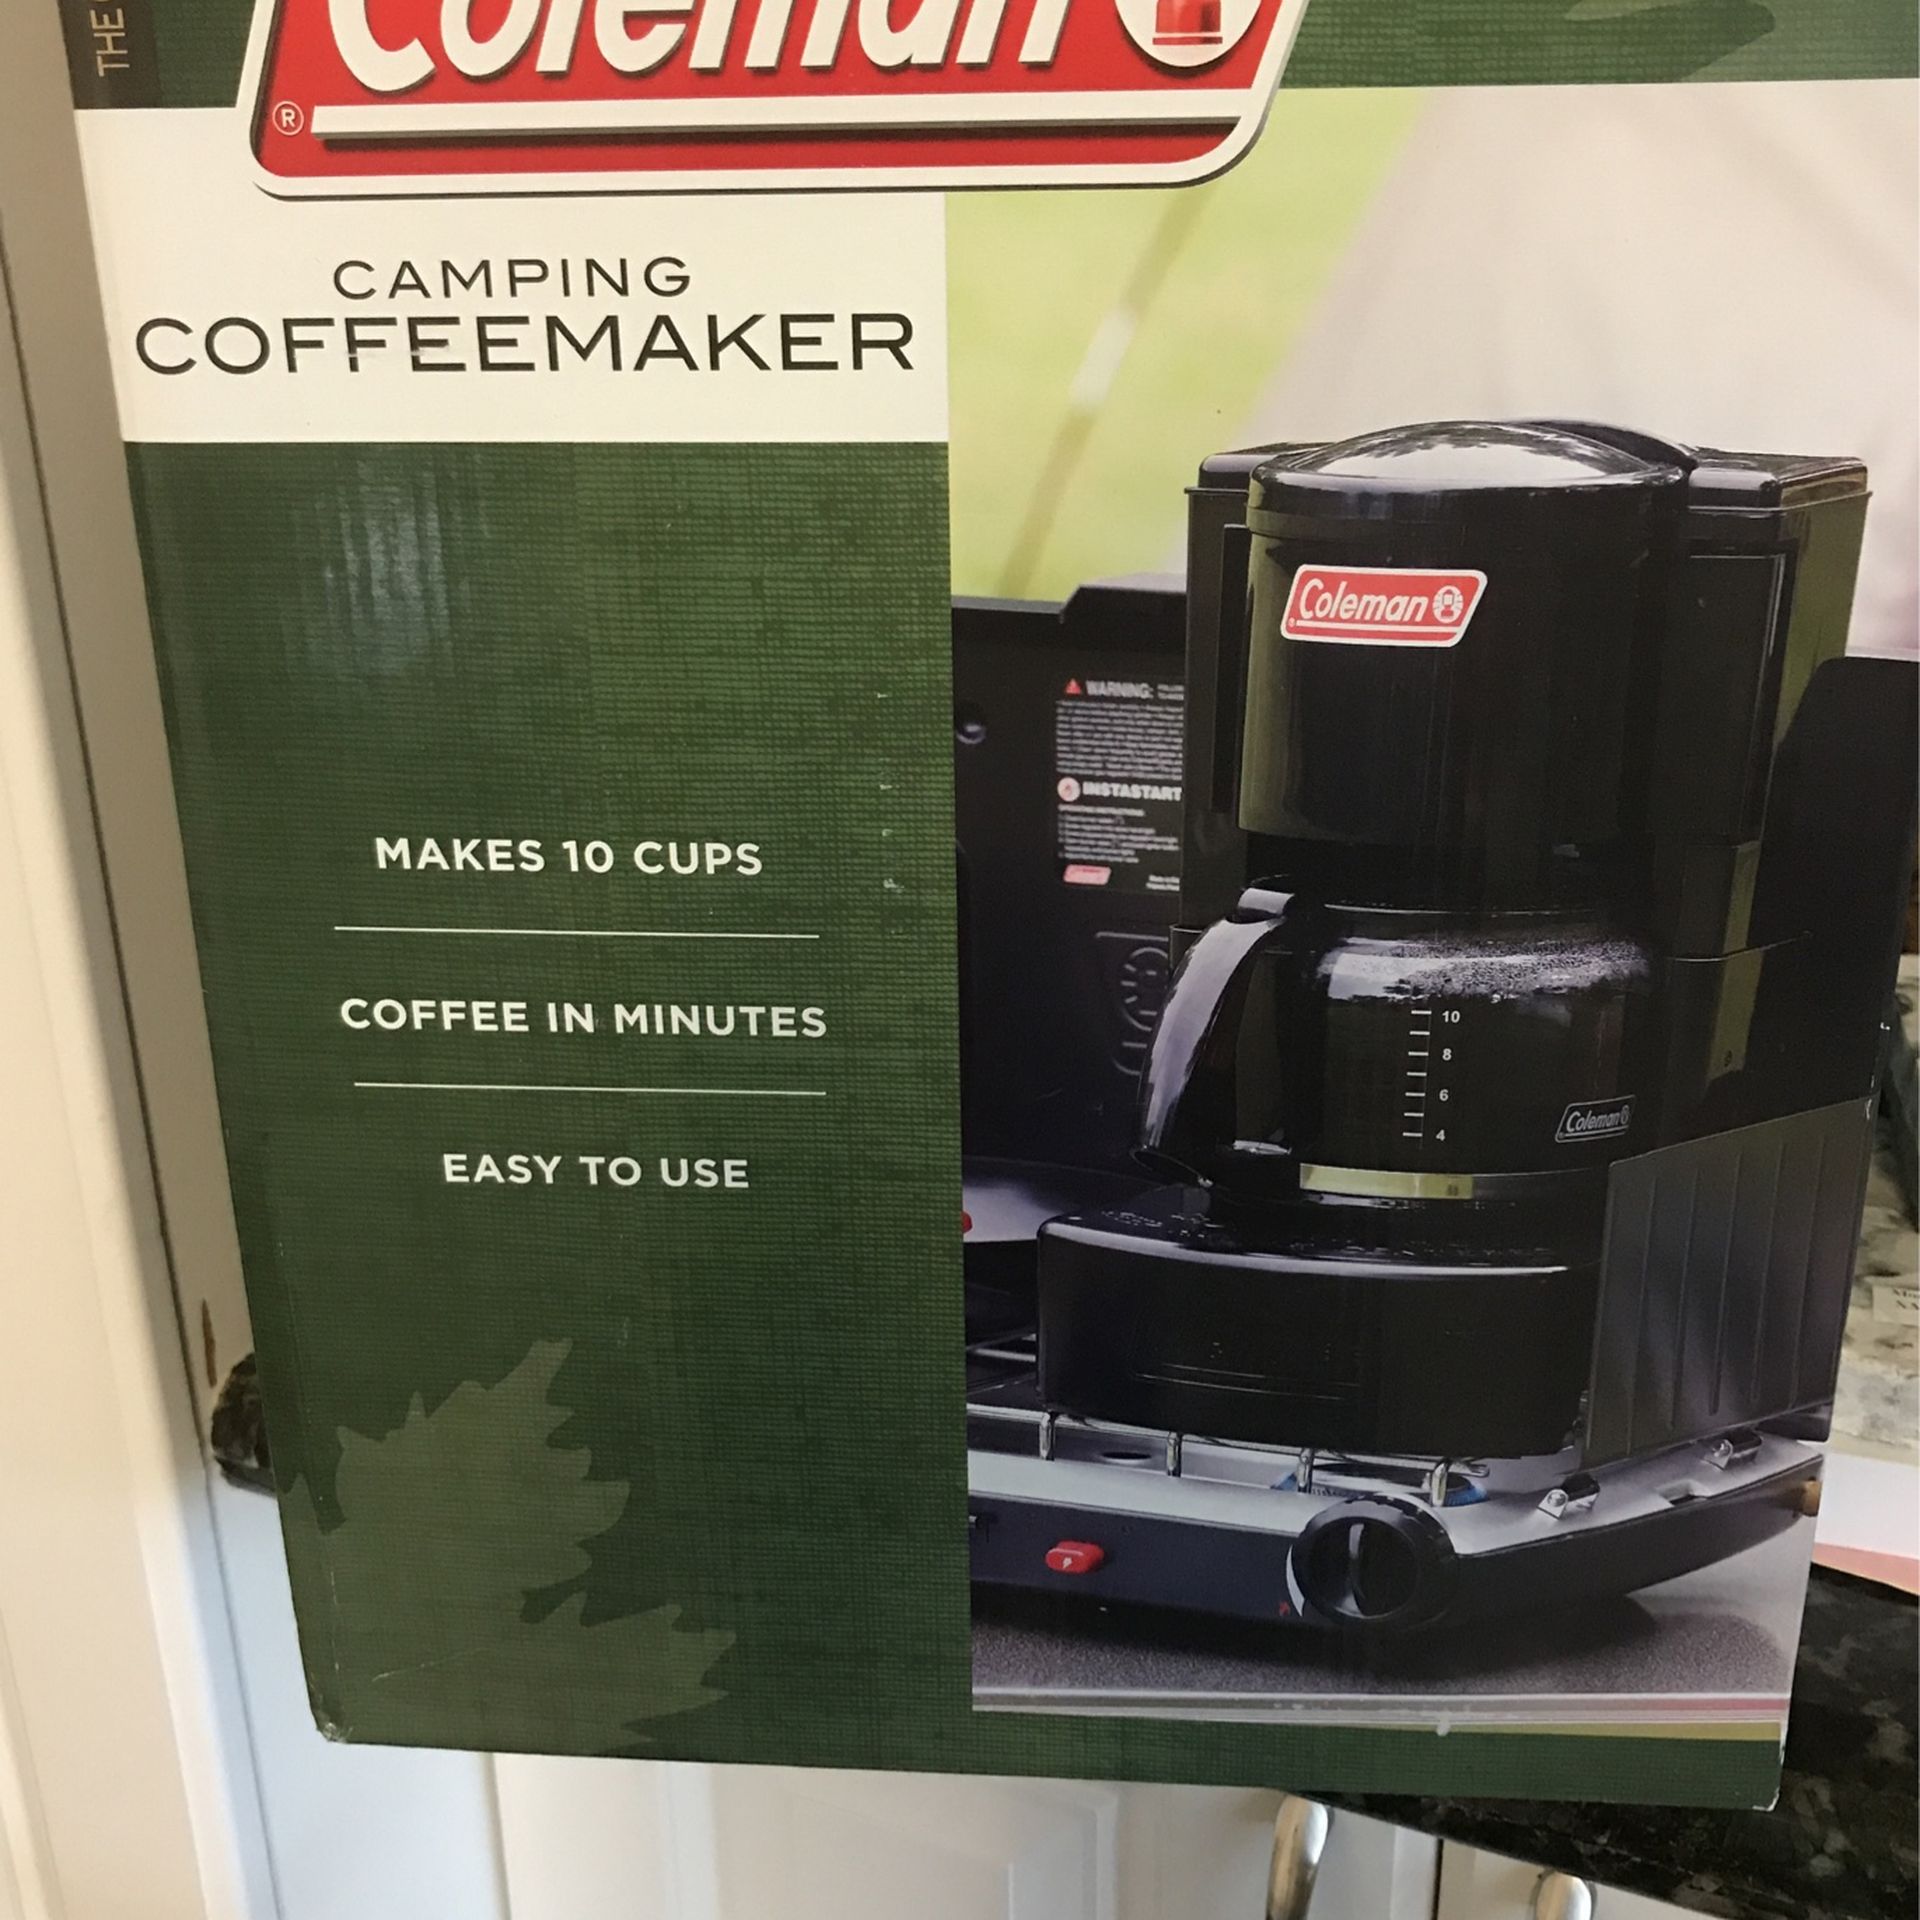 COLEMAN CAMPING COFFEEMAKER 